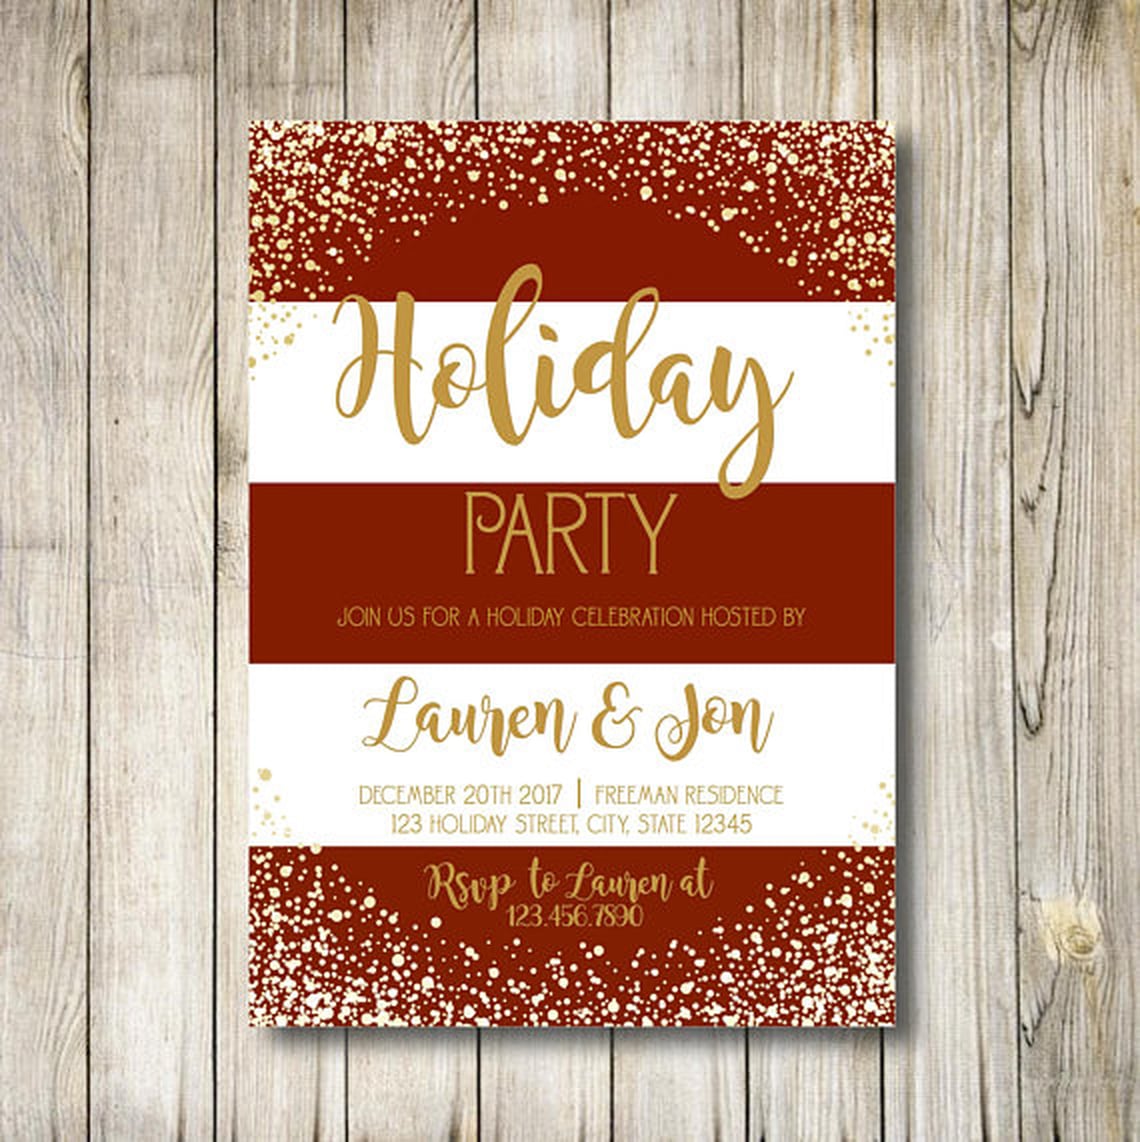 Printable Holiday Party Invitations | POPSUGAR Smart Living